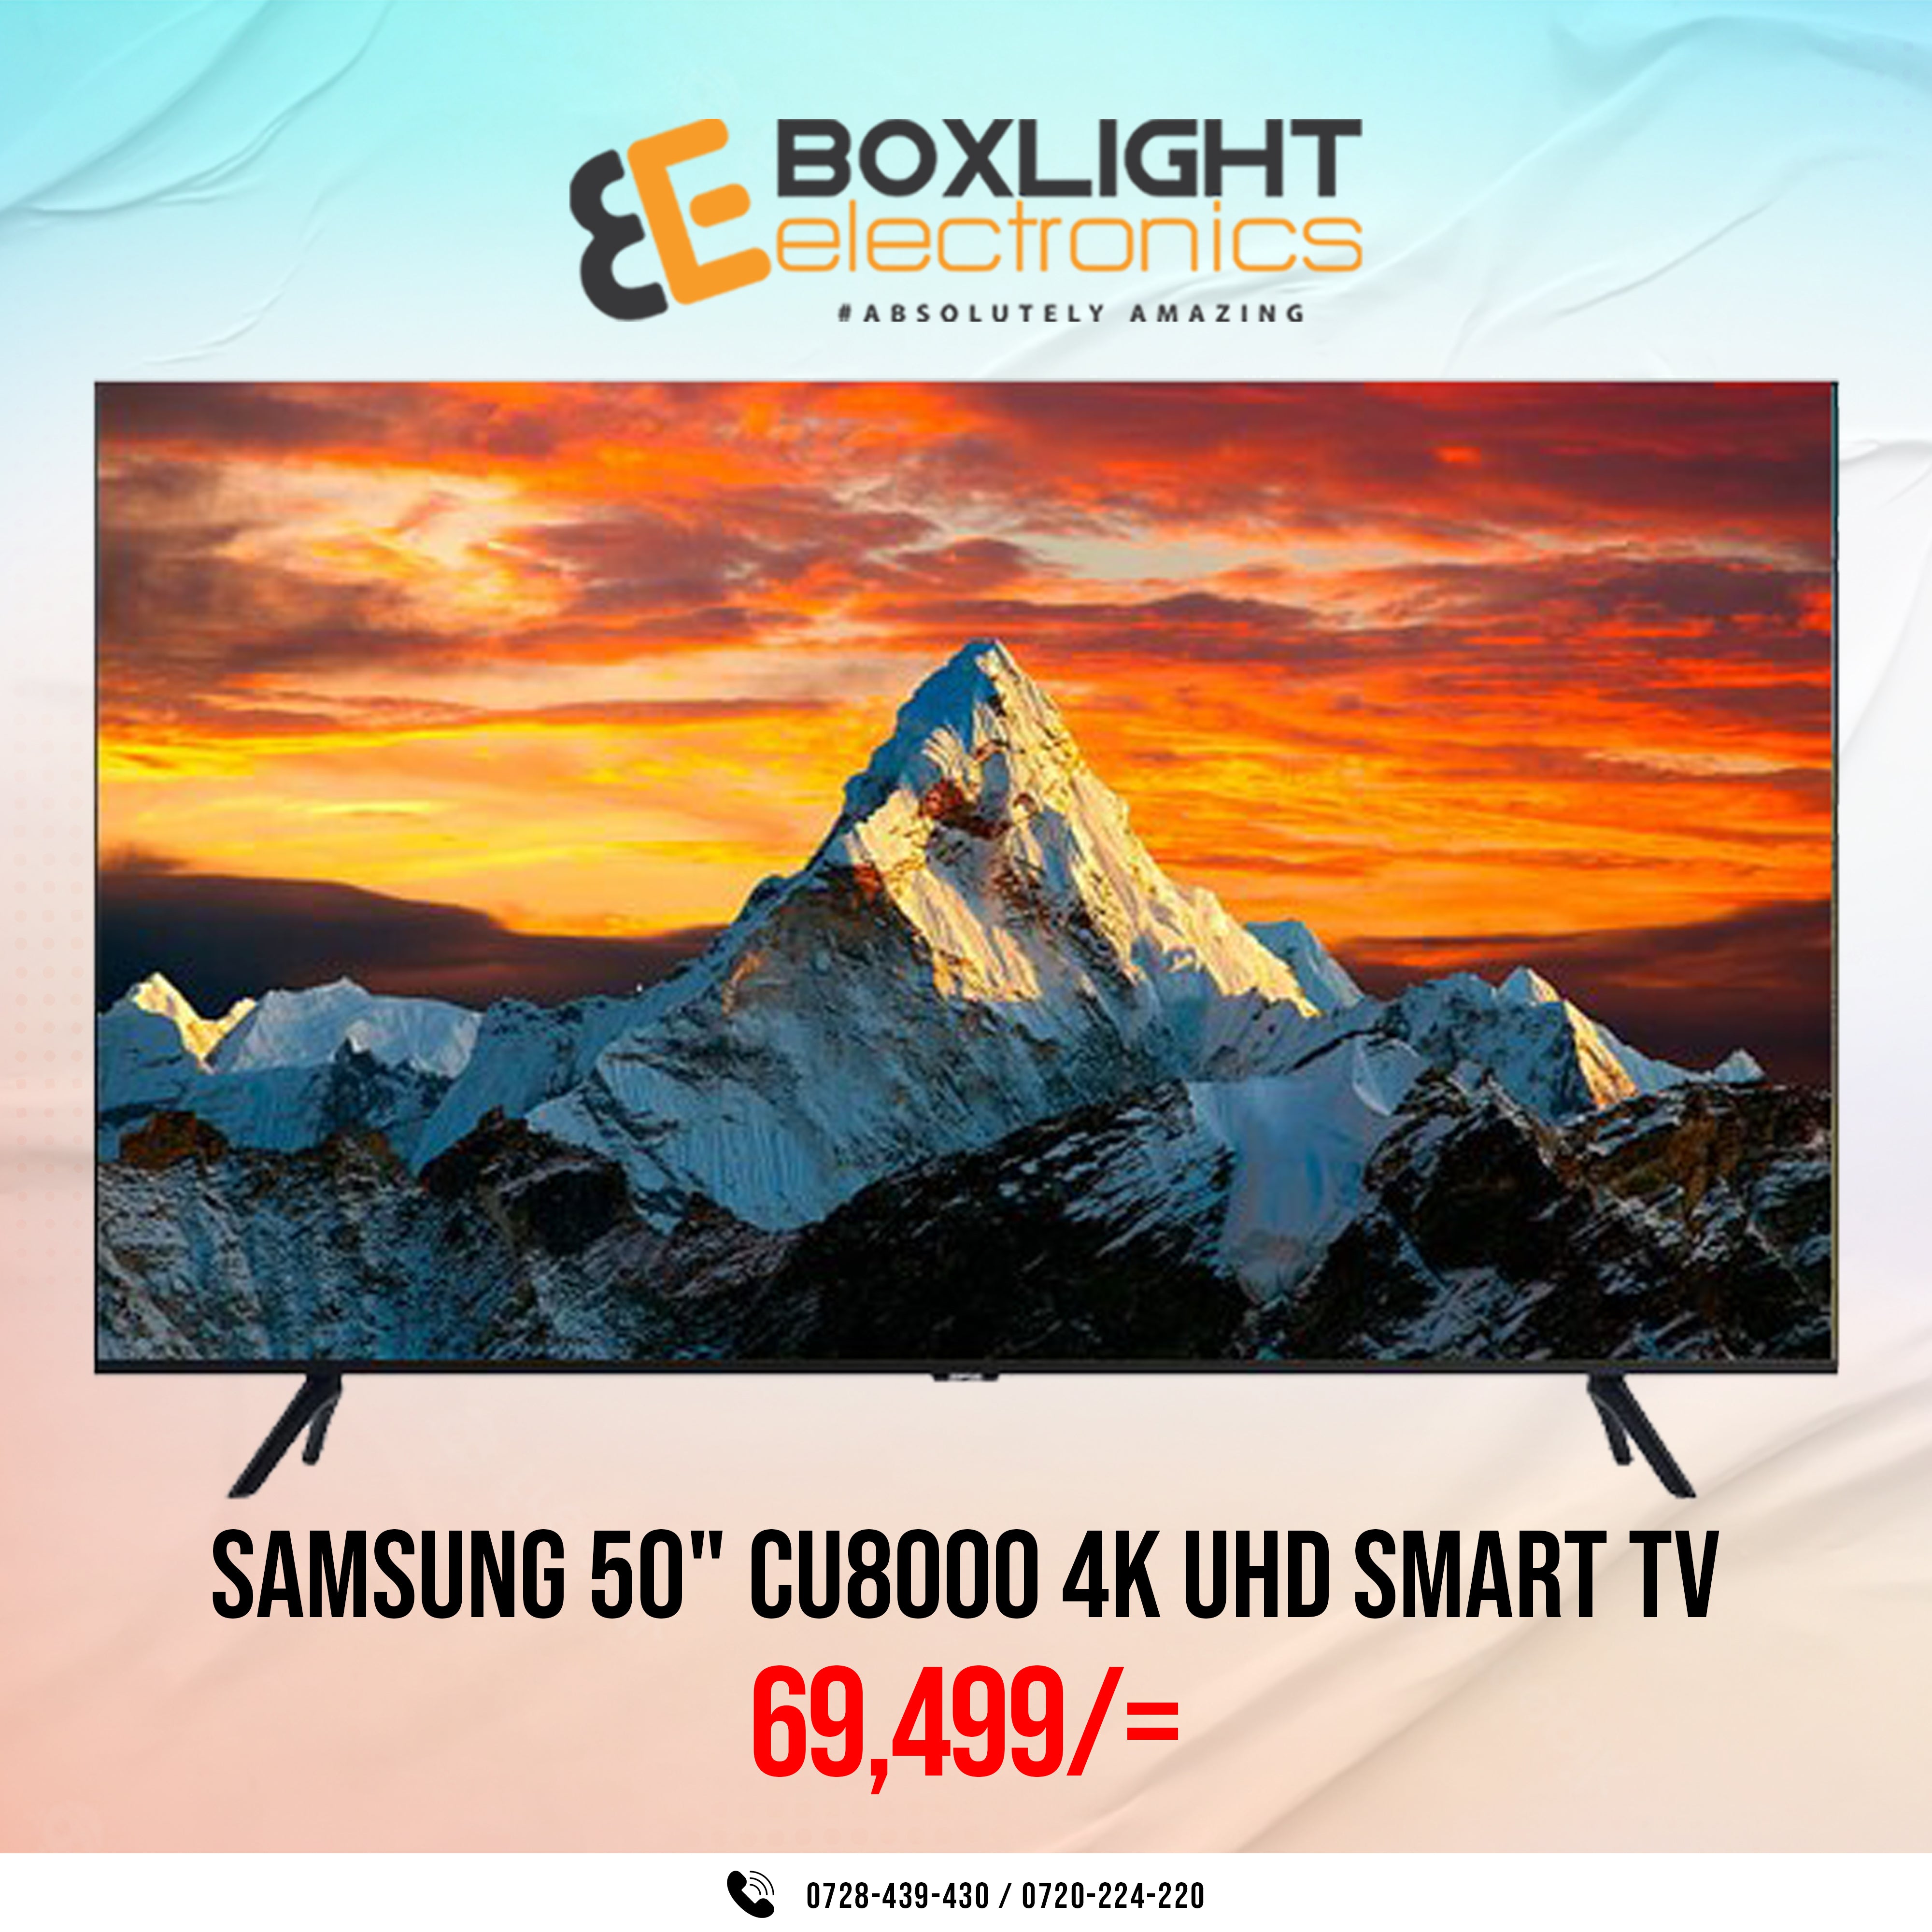 Samsung 50CU8000 50" Inch Crystal 4K UHD Smart LED TV